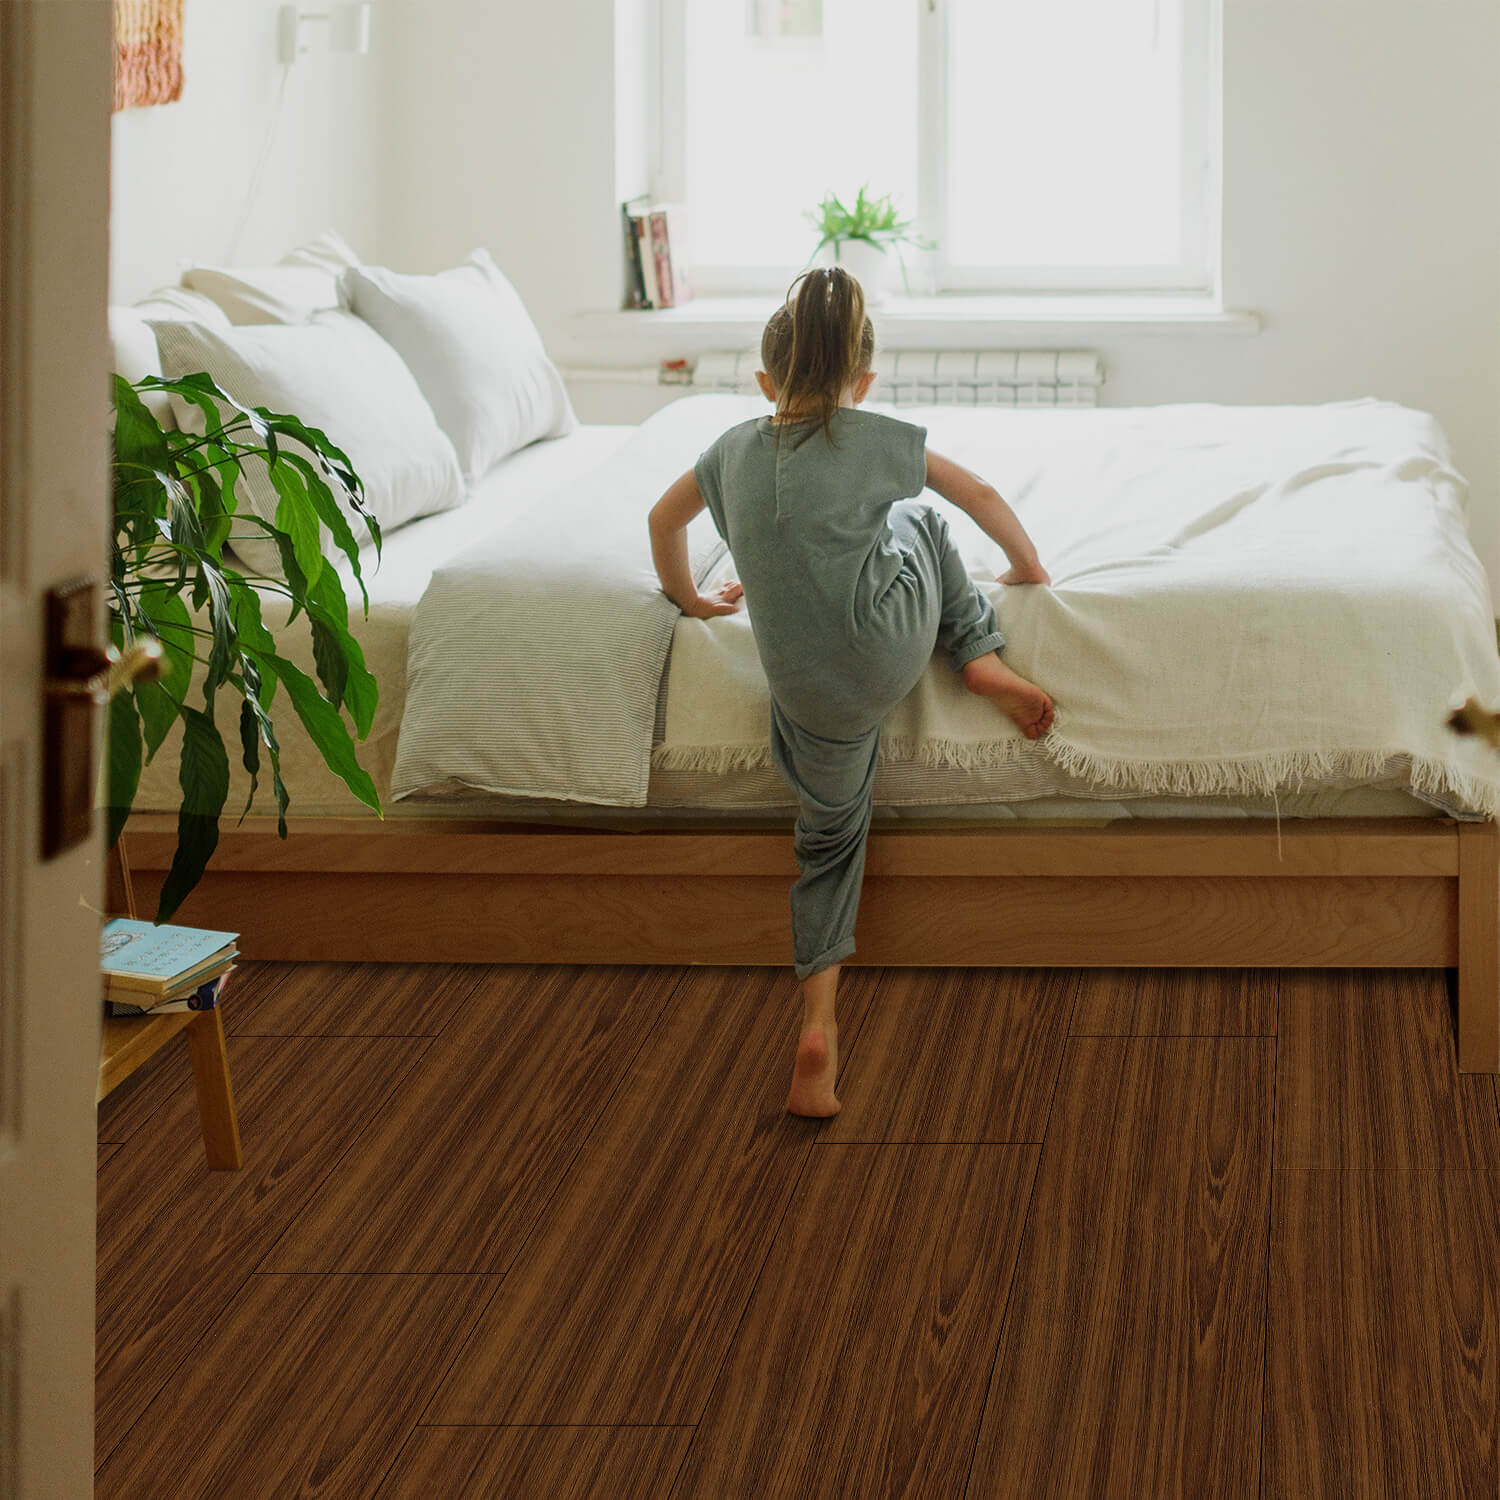 1 rollo de adhesivo de pared con diseño de madera, adhesivo de pared  rectangular, vinilo autoadhesivo, adhesivo impermeable para suelo de  dormitorio